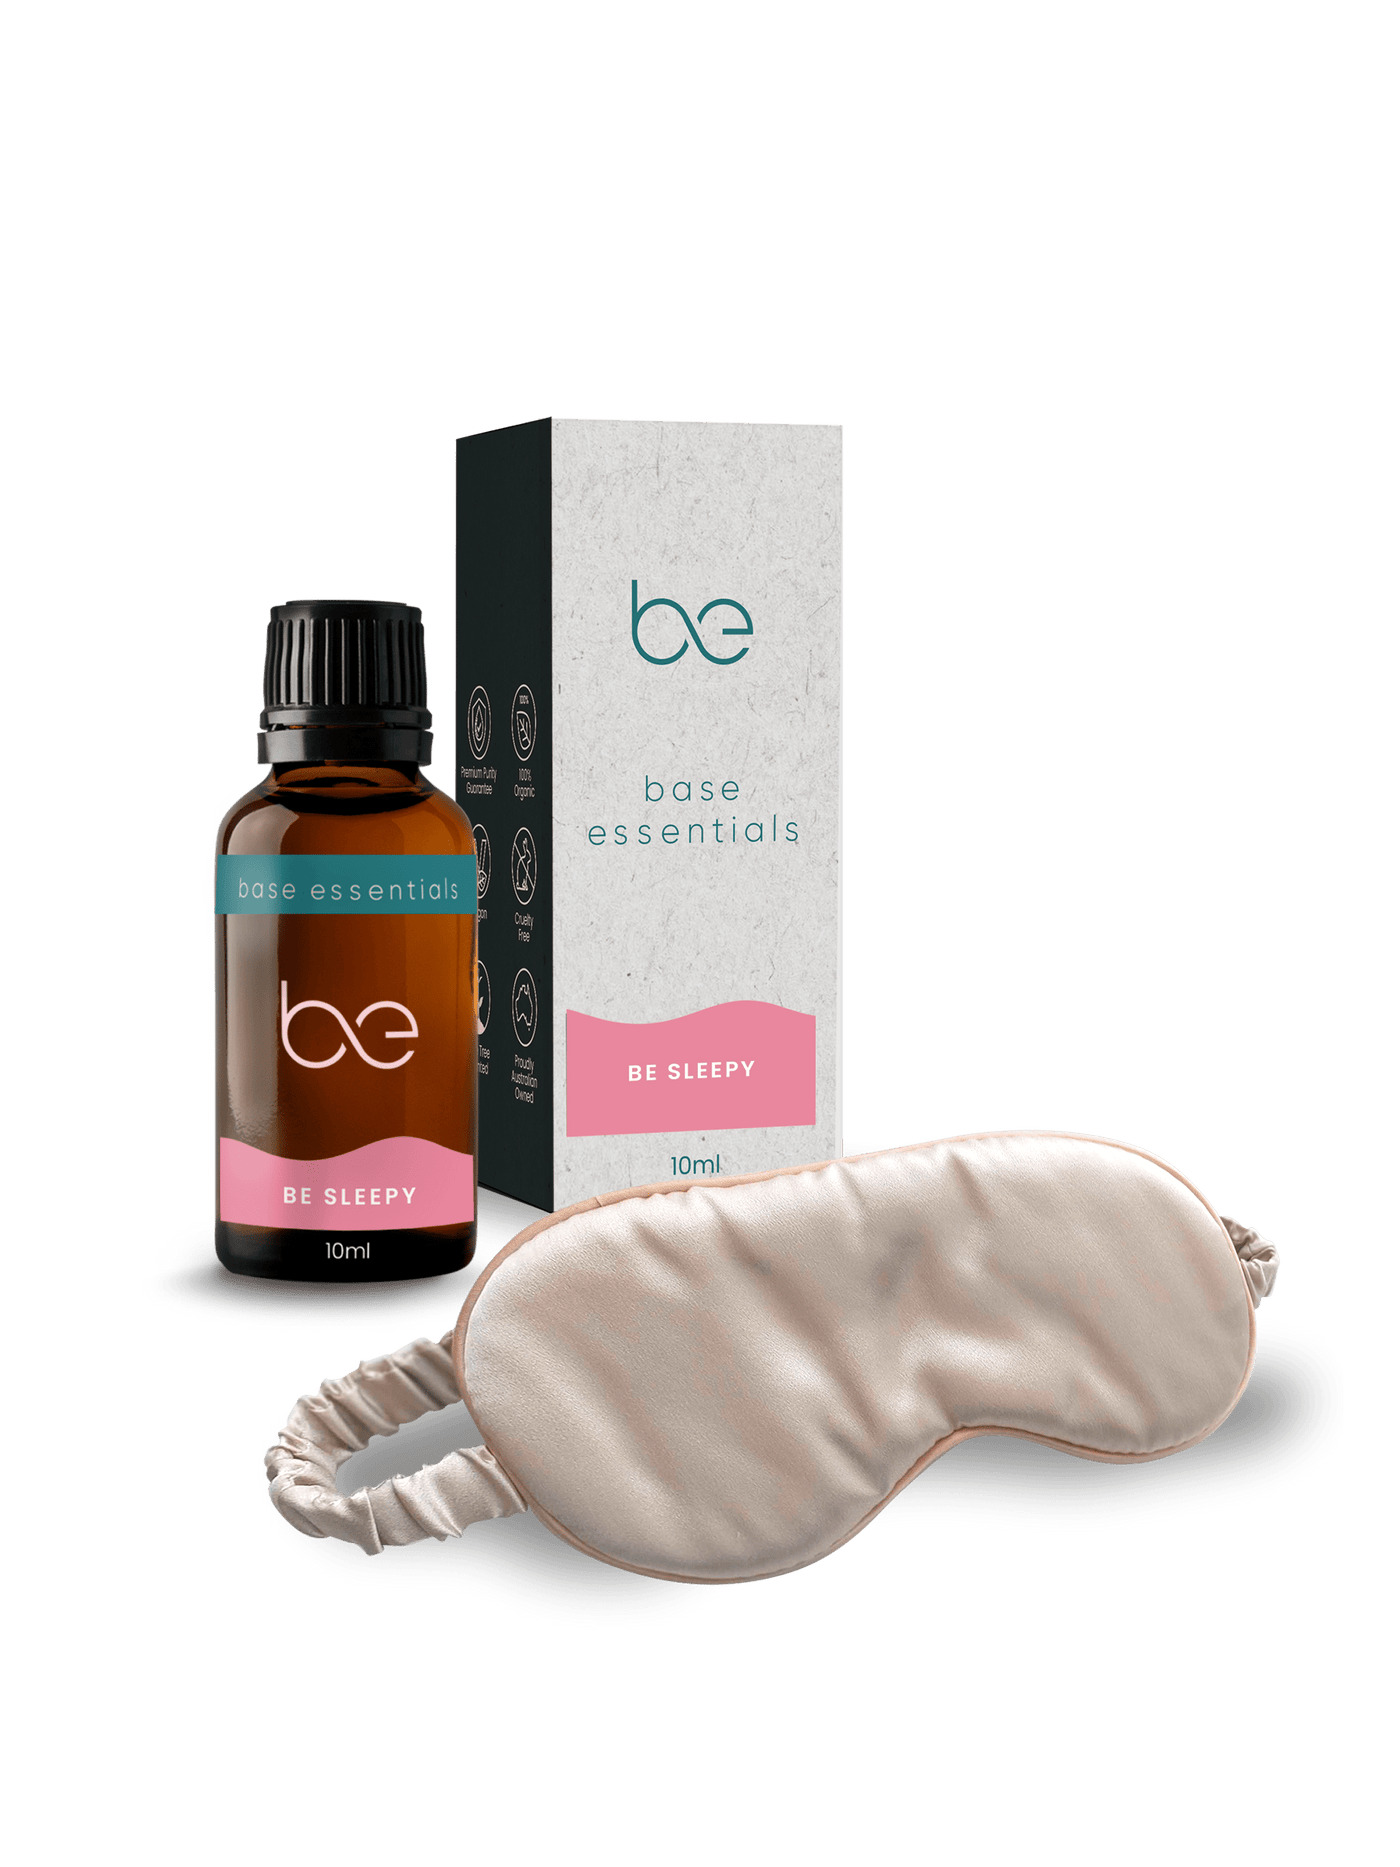 Base Essentials Fragrance Oil Be Sleepy Pure Silk Eye Mask & Essential Oil Kit